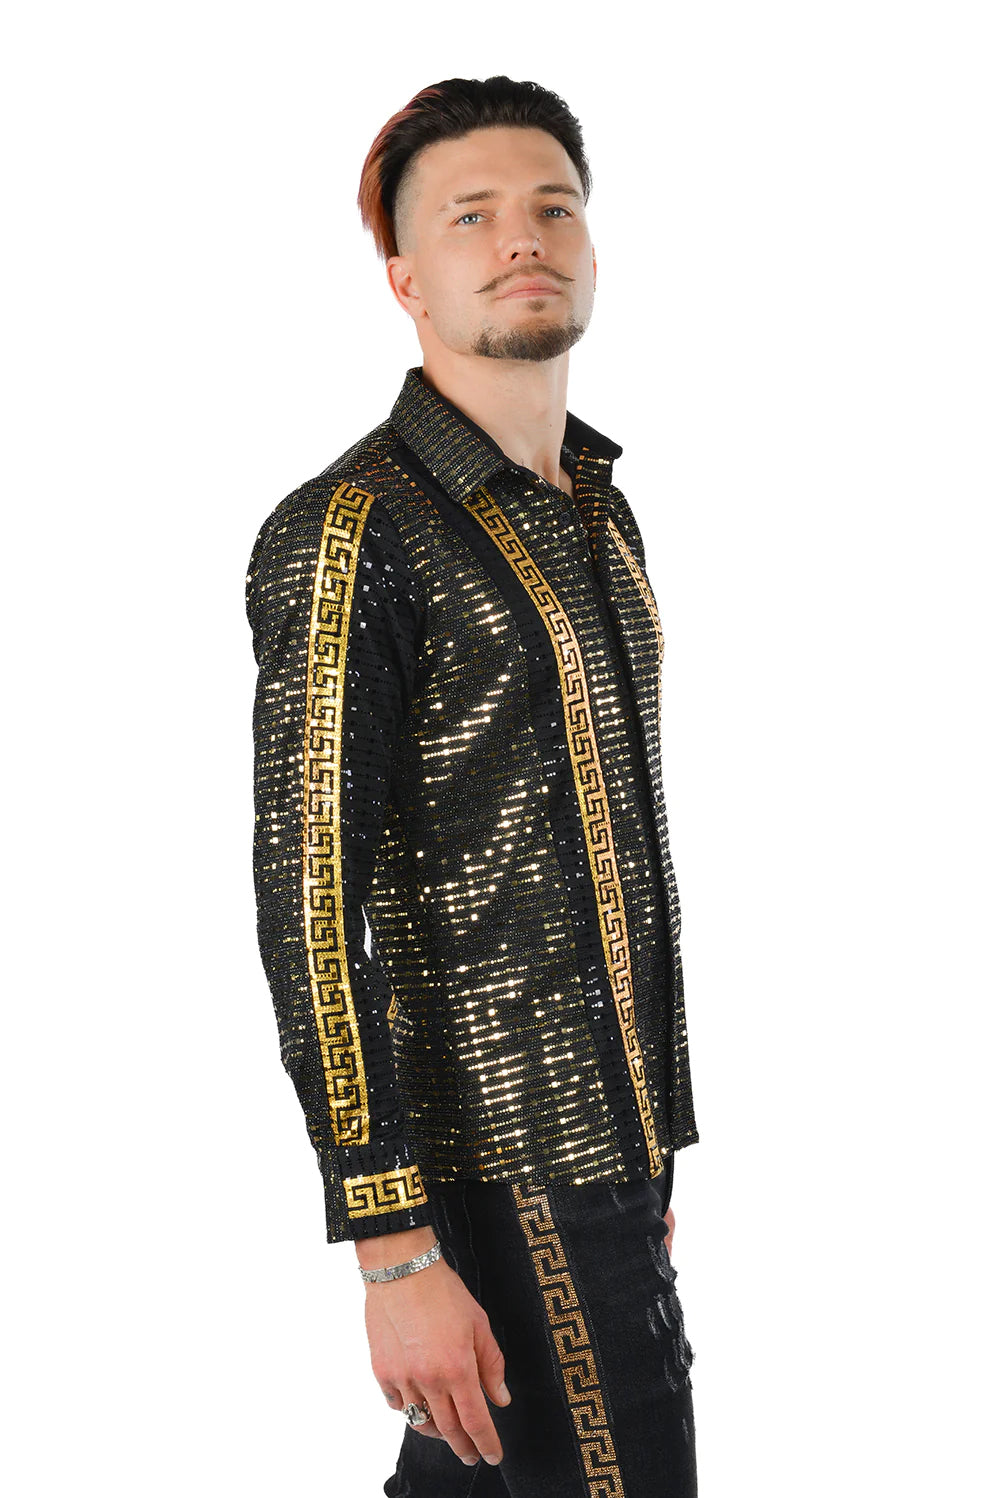 La Greca Gold and Black Two-Tone Greek Key Pattern Long-Sleeve Shirt